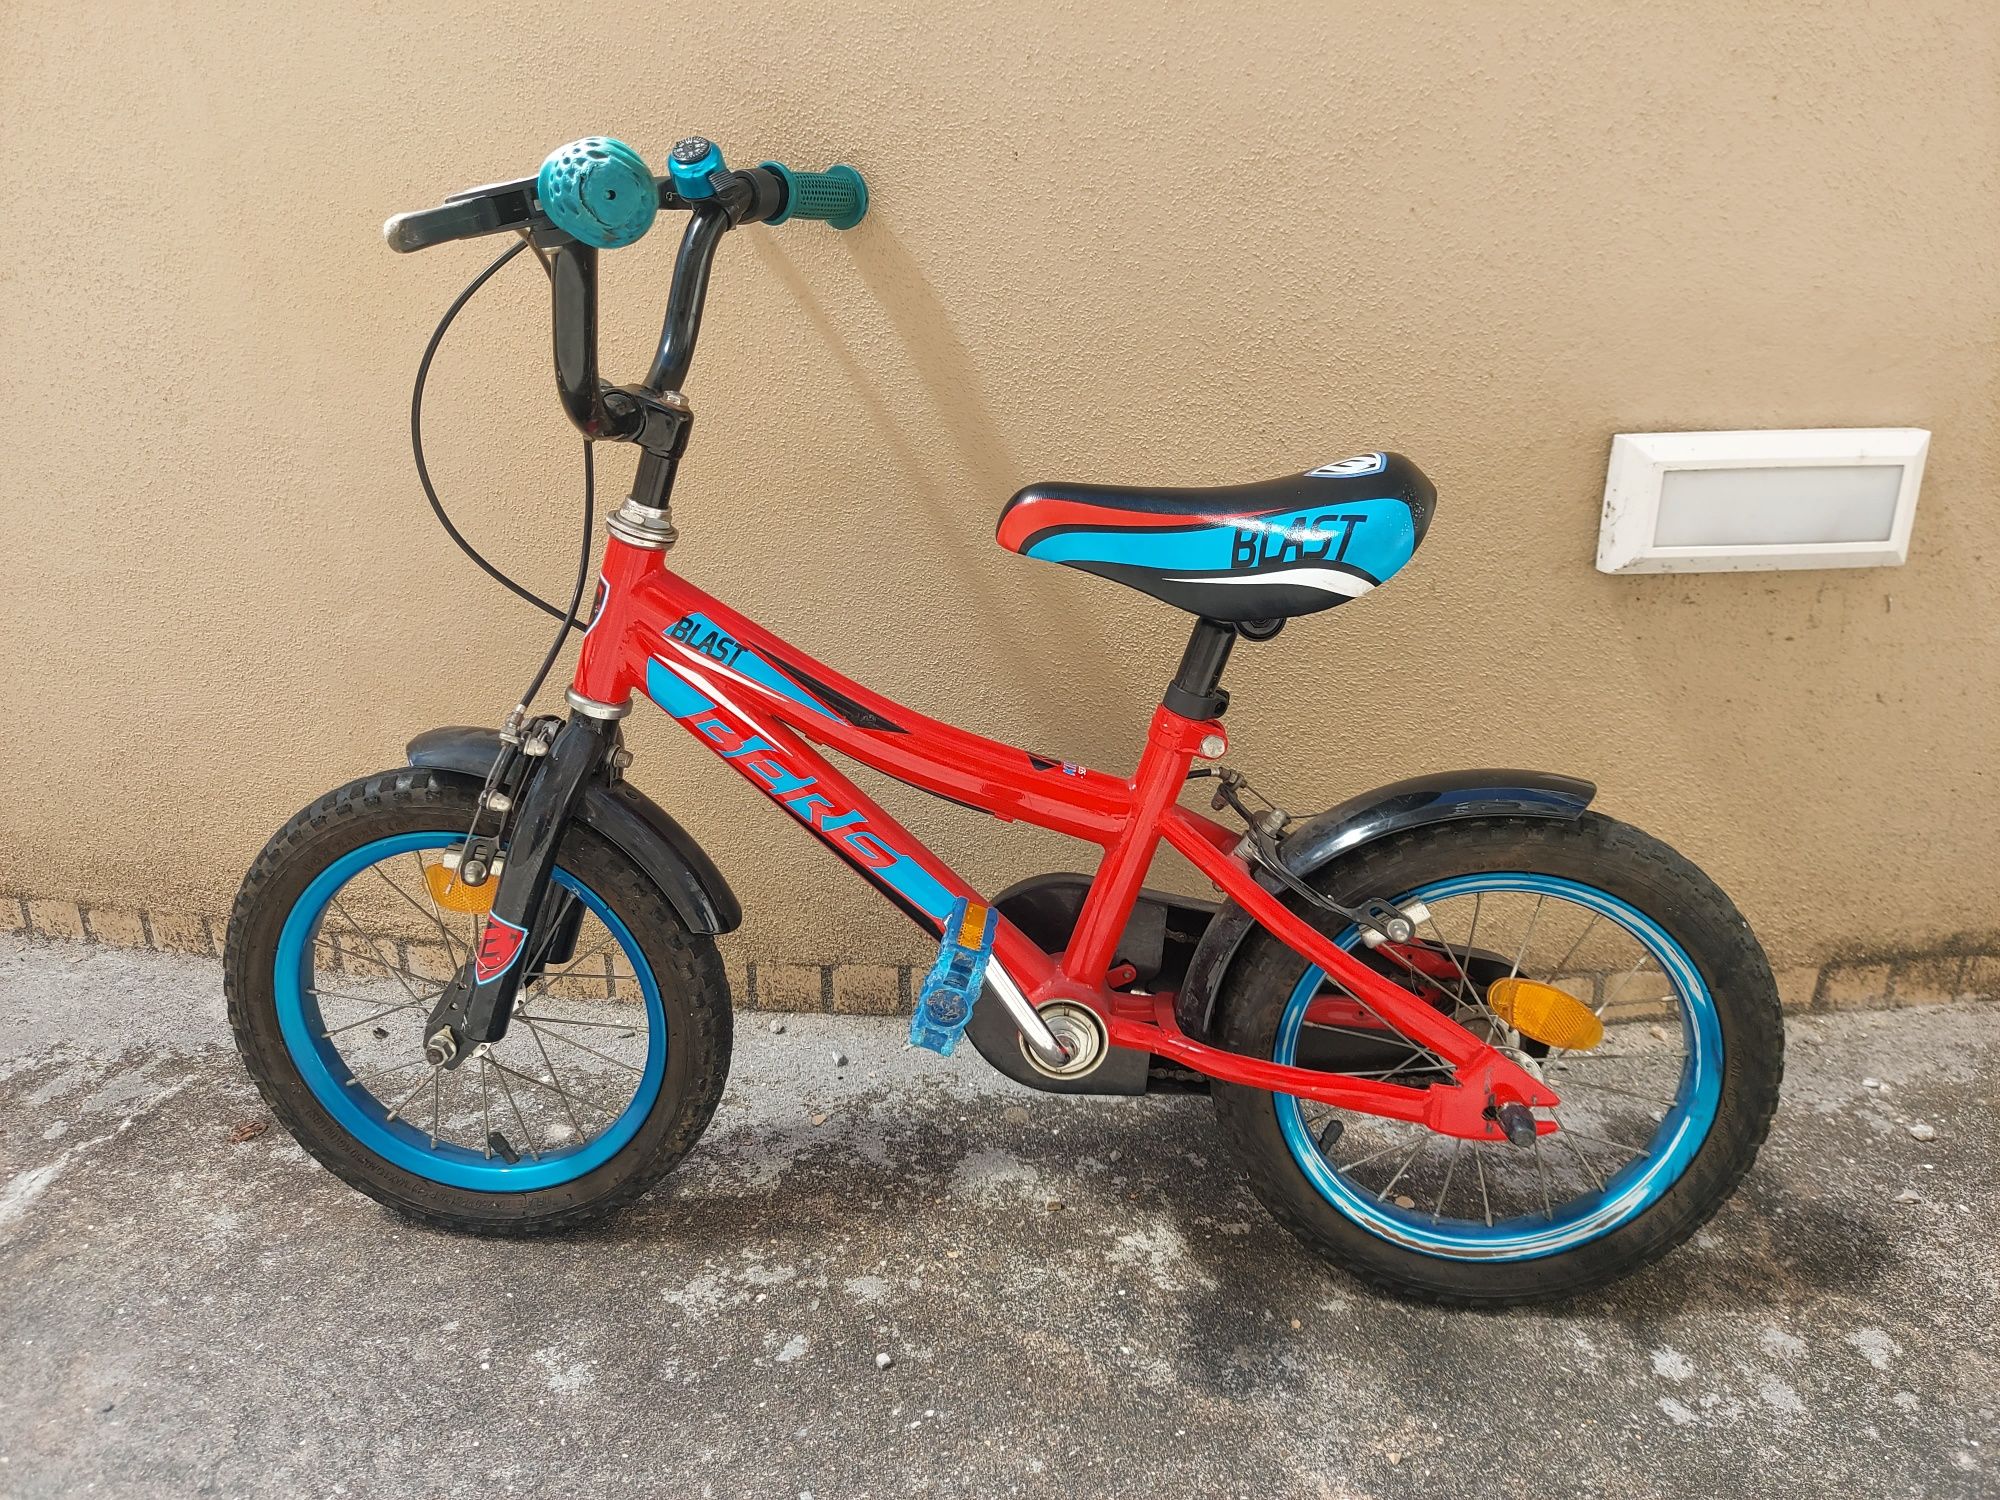 Bicicleta criança Berg Fast rapaz roda 14